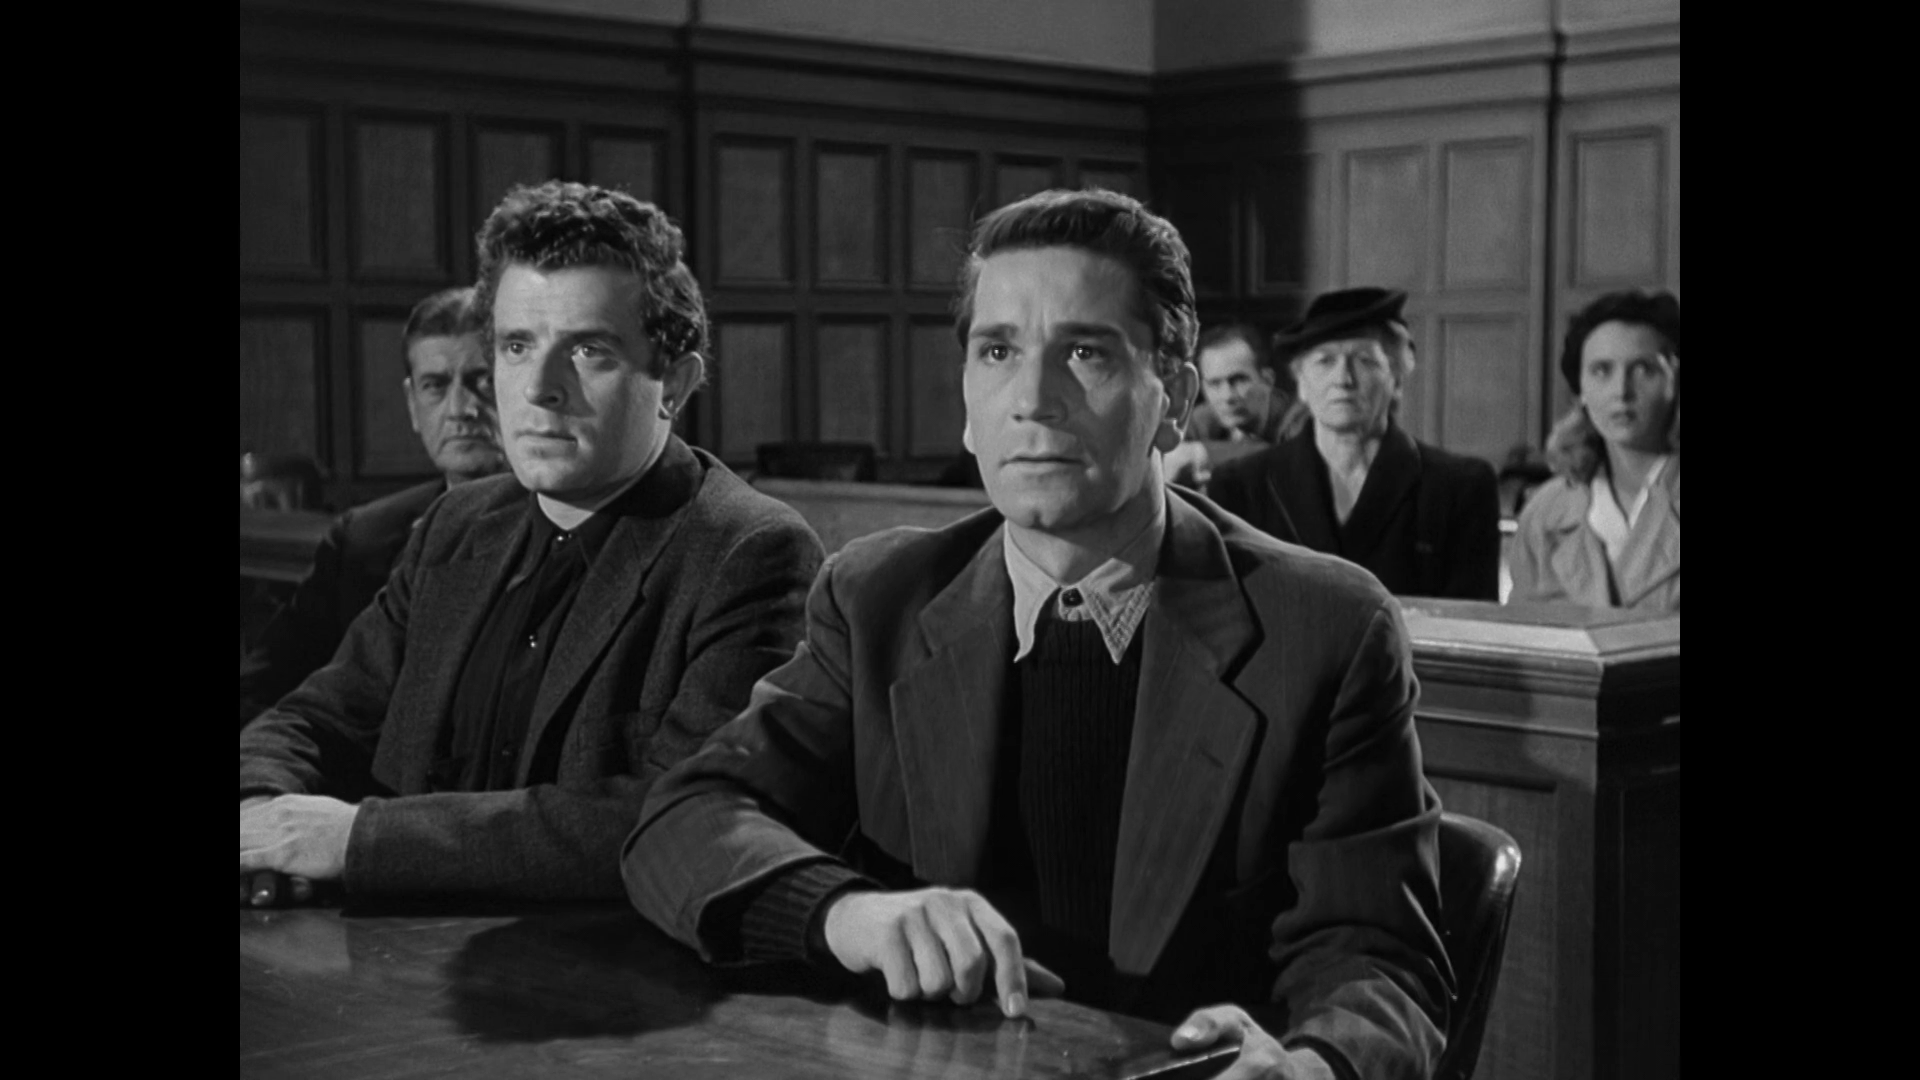 George Tyne et Richard Conte dans le film Call Northside 777 (Appelez Nord 777, 1948) de Henry Hathaway